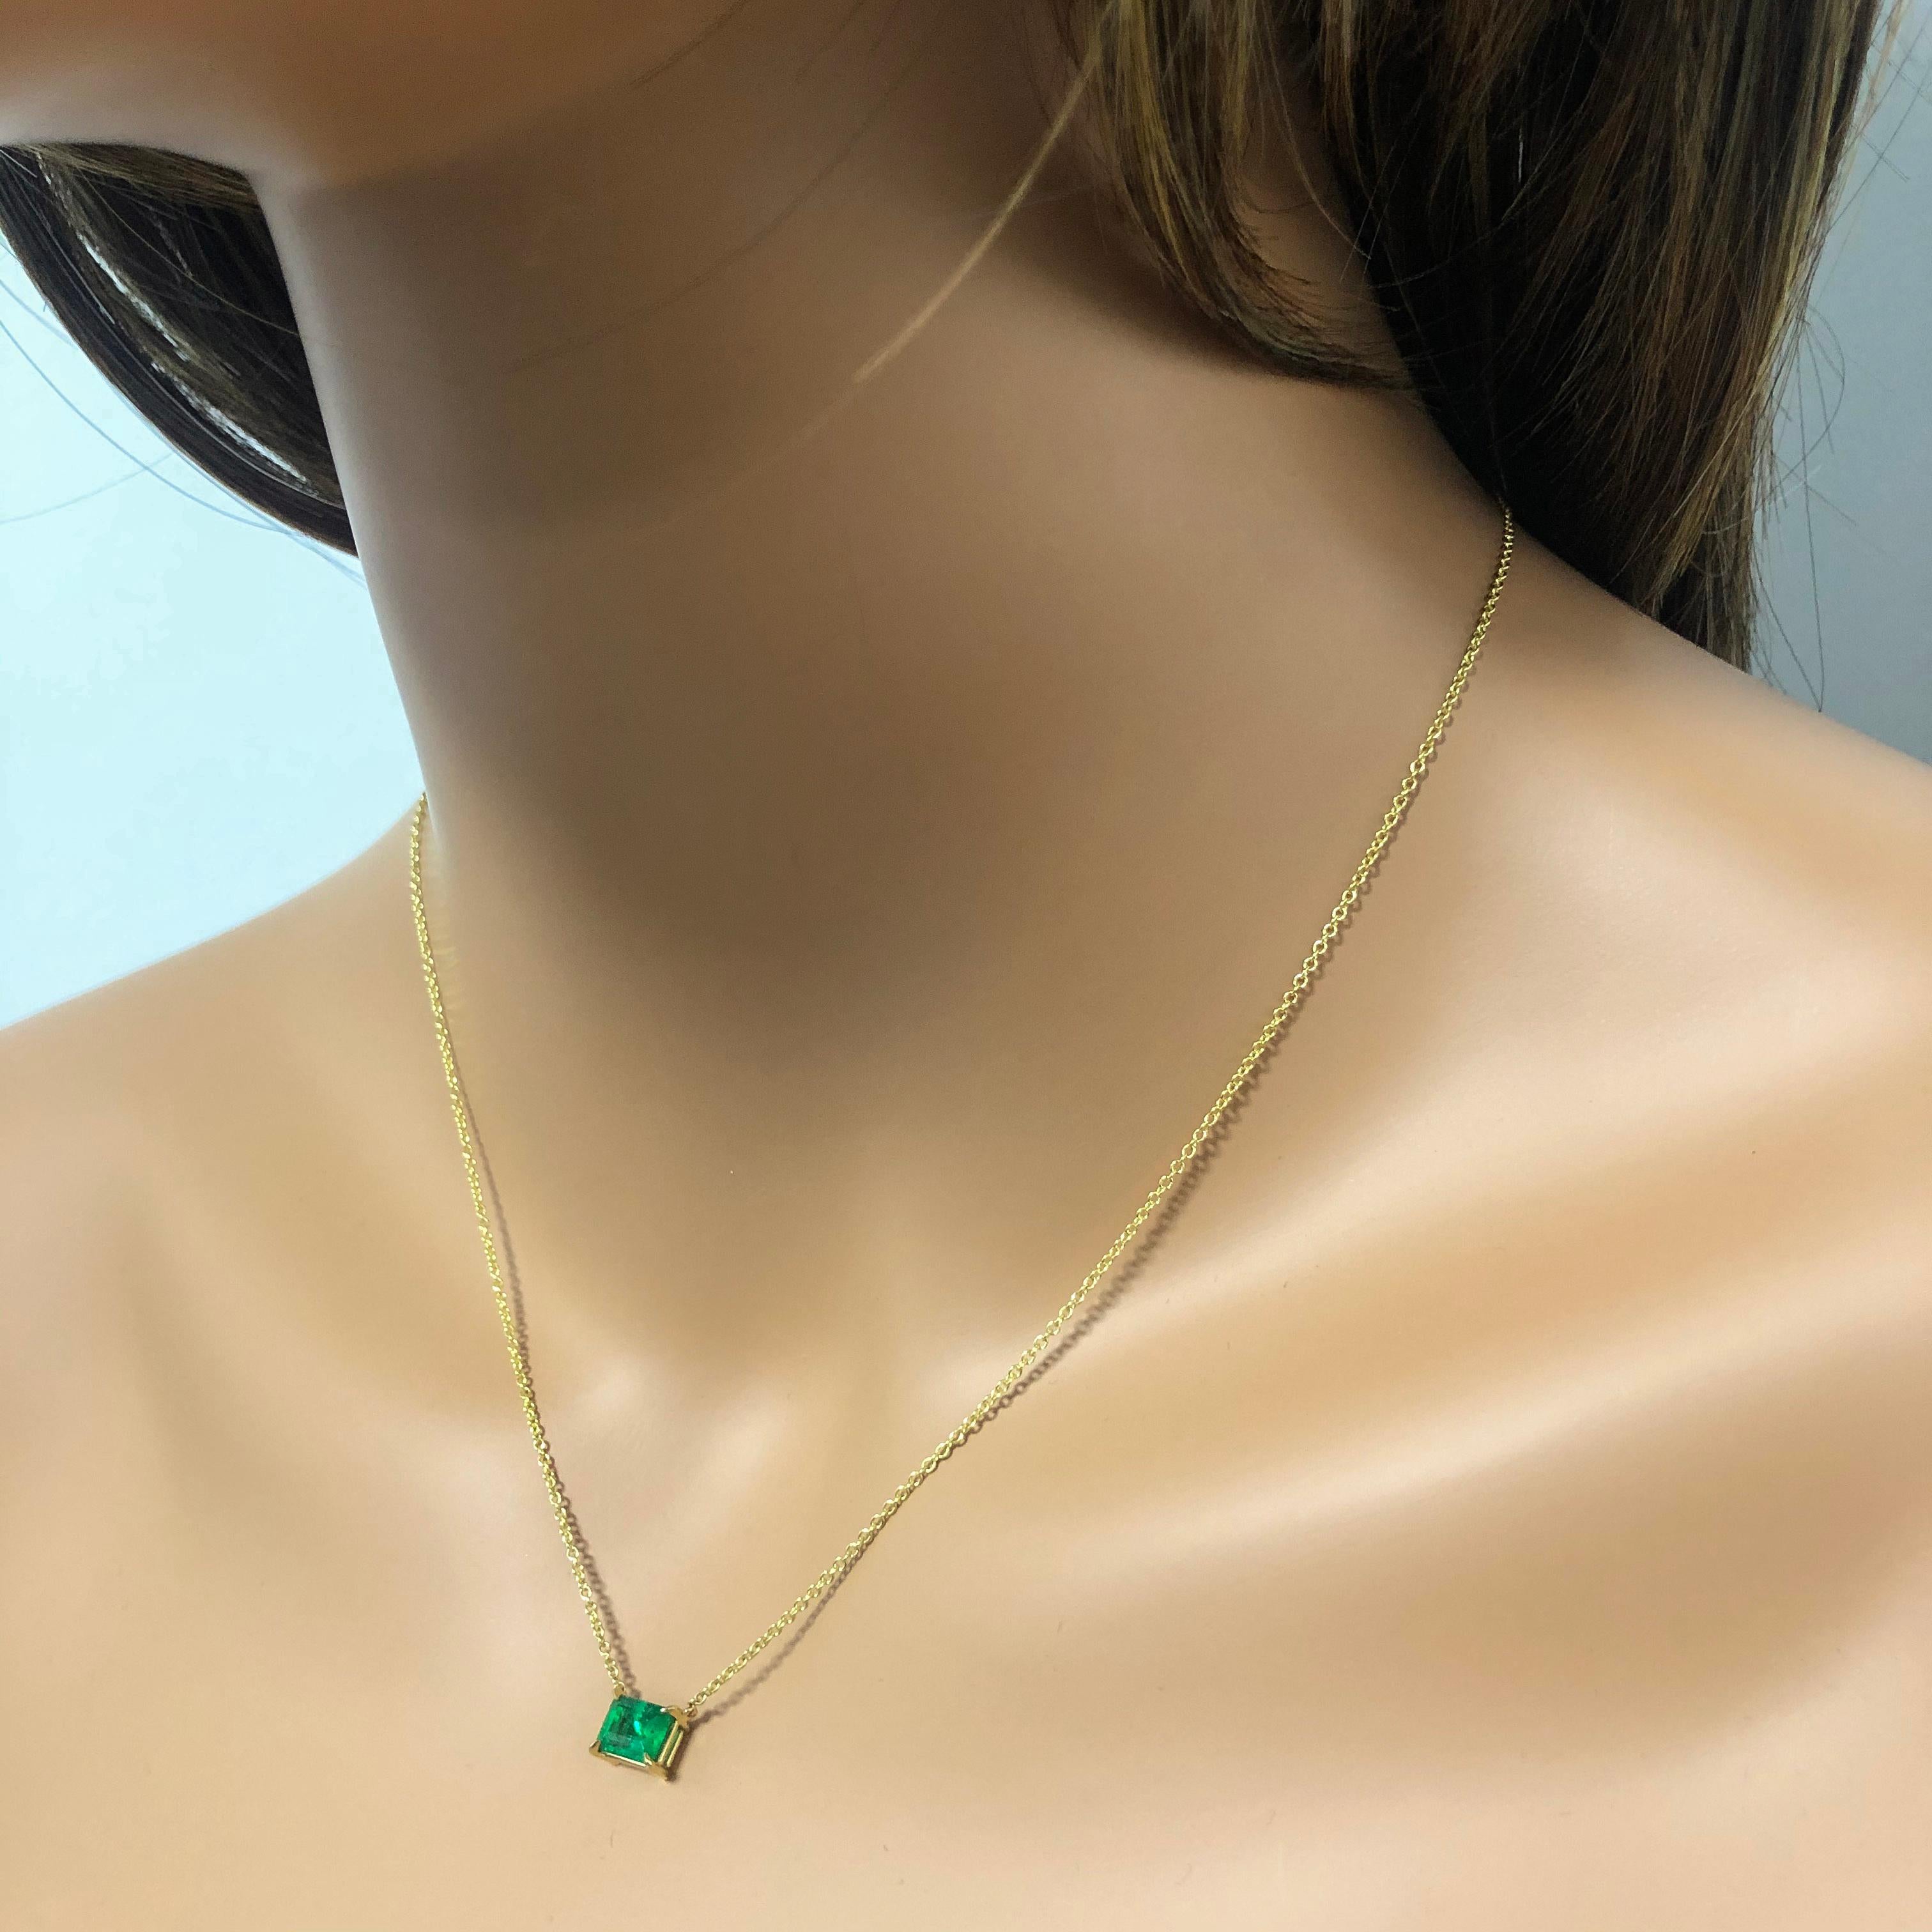 Emerald Cut Roman Malakov 1.04 Carat Green Emerald Solitaire Pendant Necklace